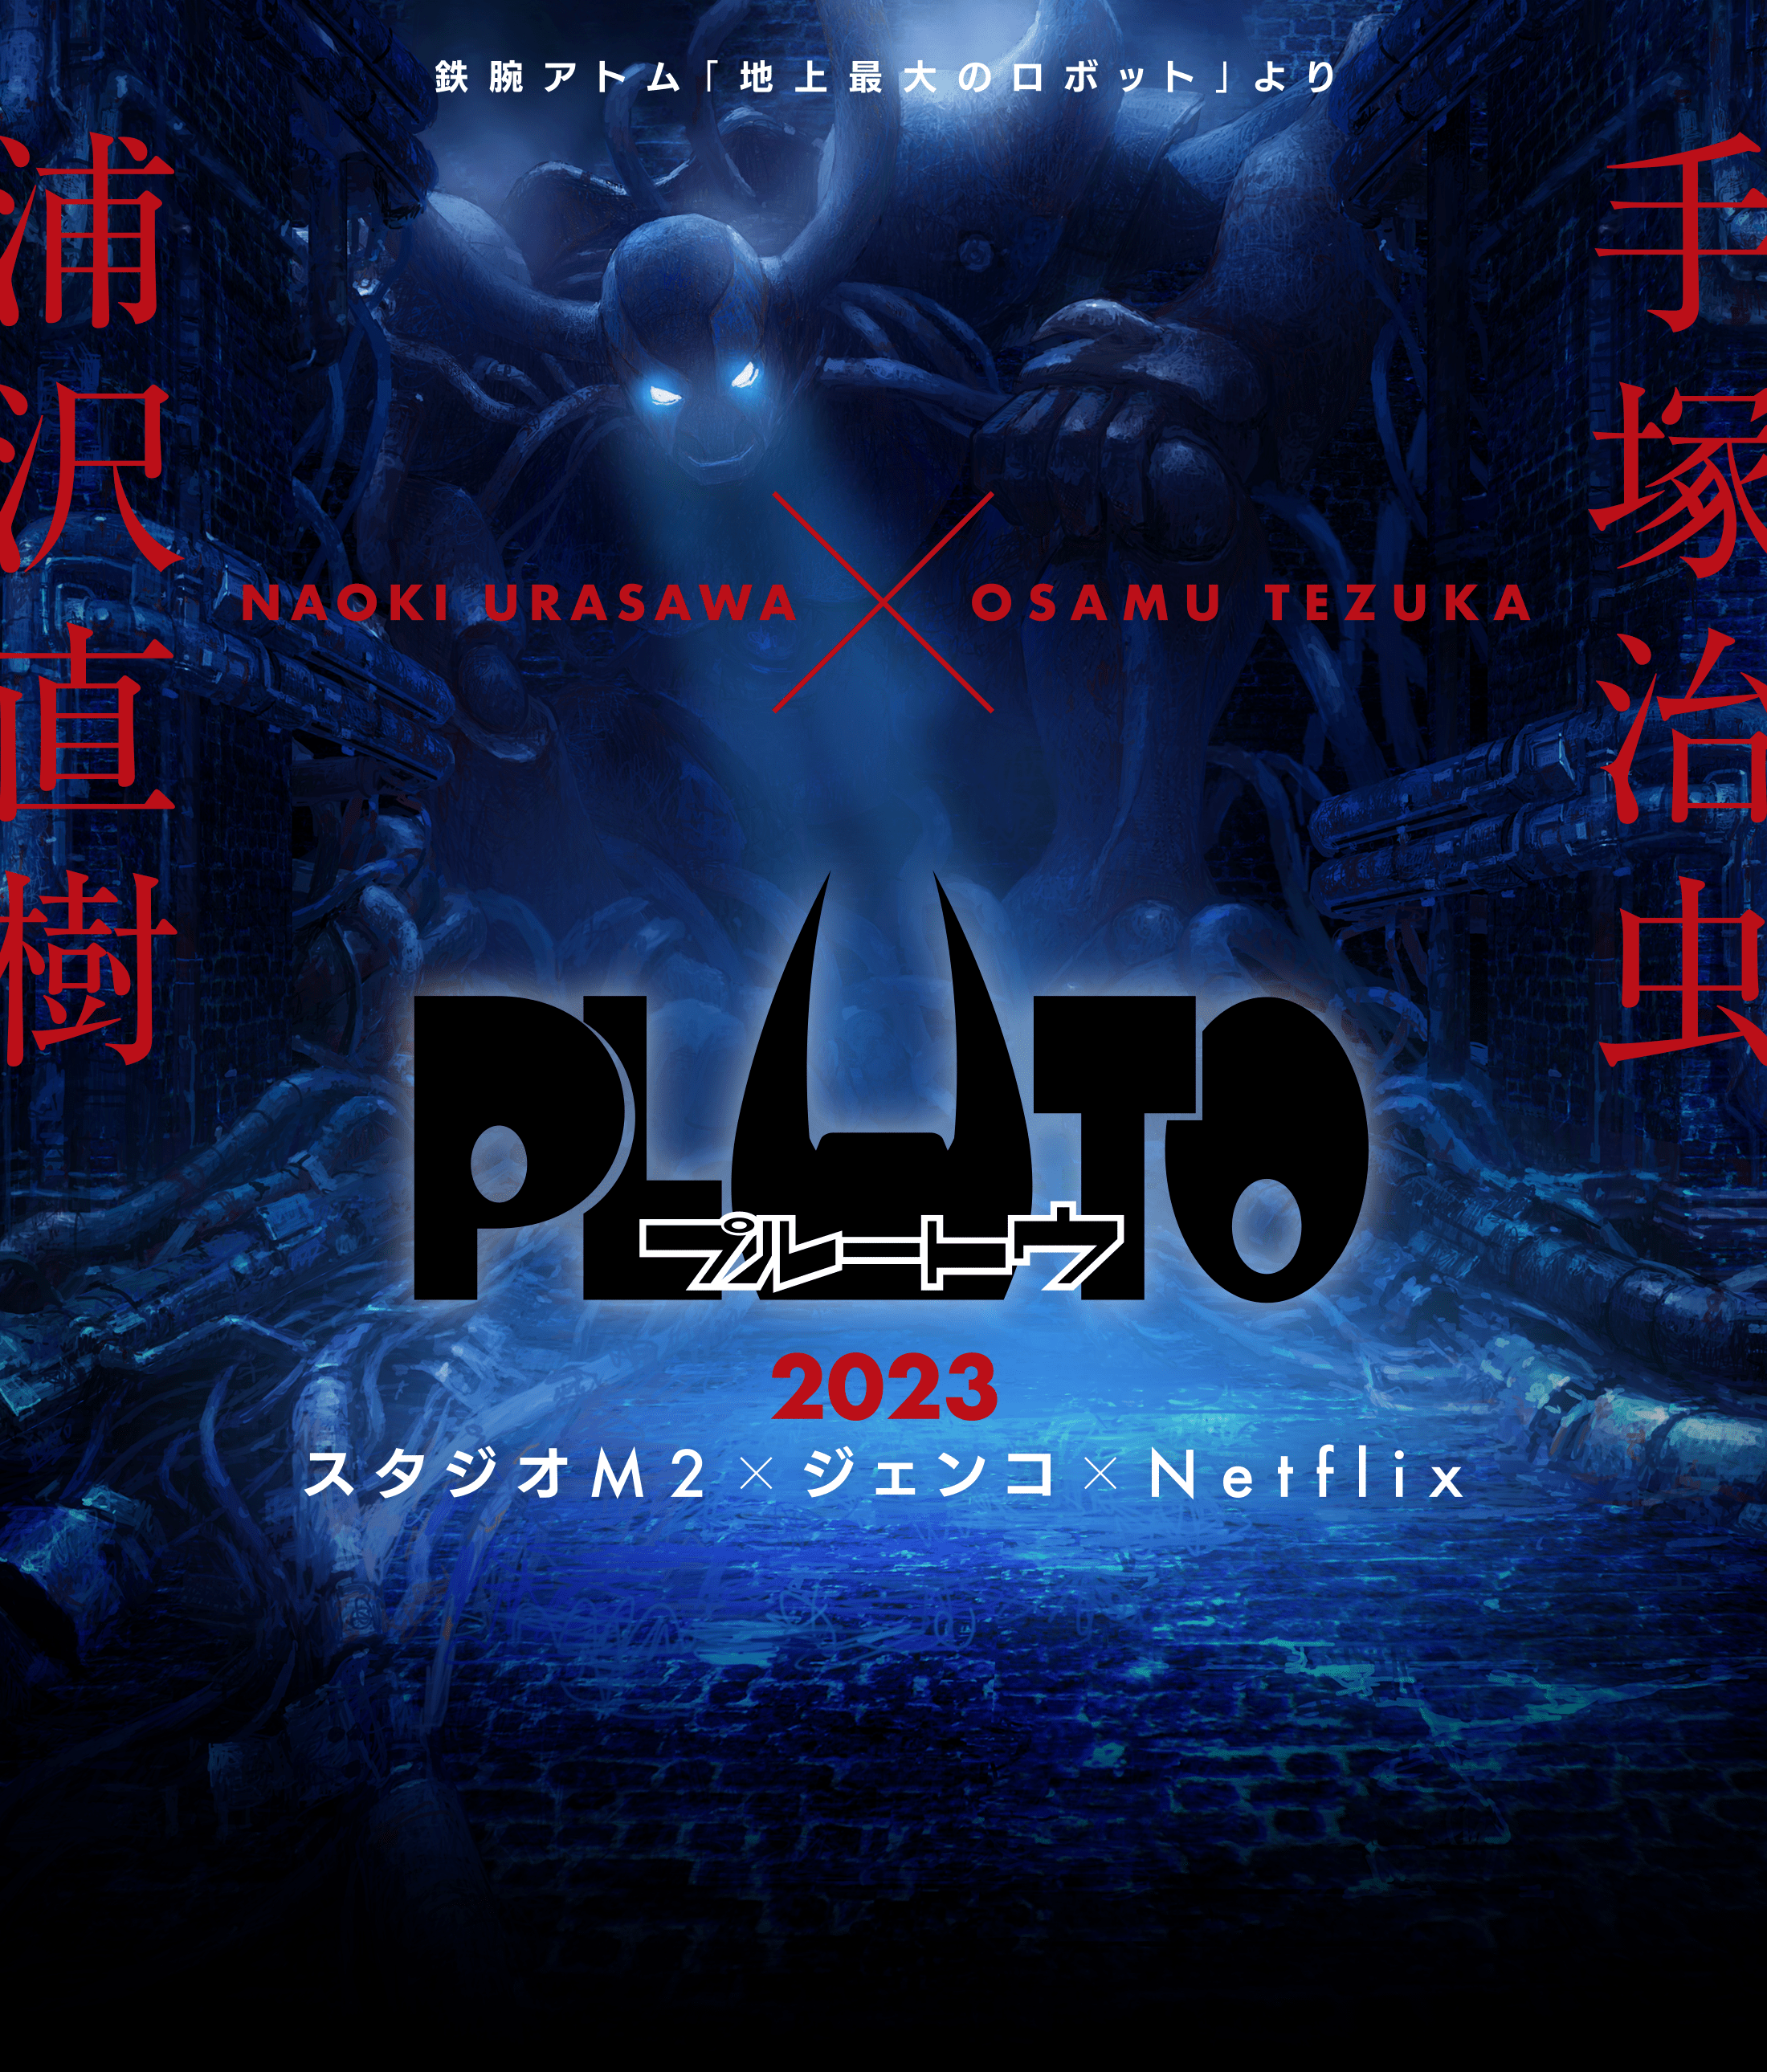 Naoki Urasawa's Pluto Anime Teaser Trailer Revealed - ORENDS